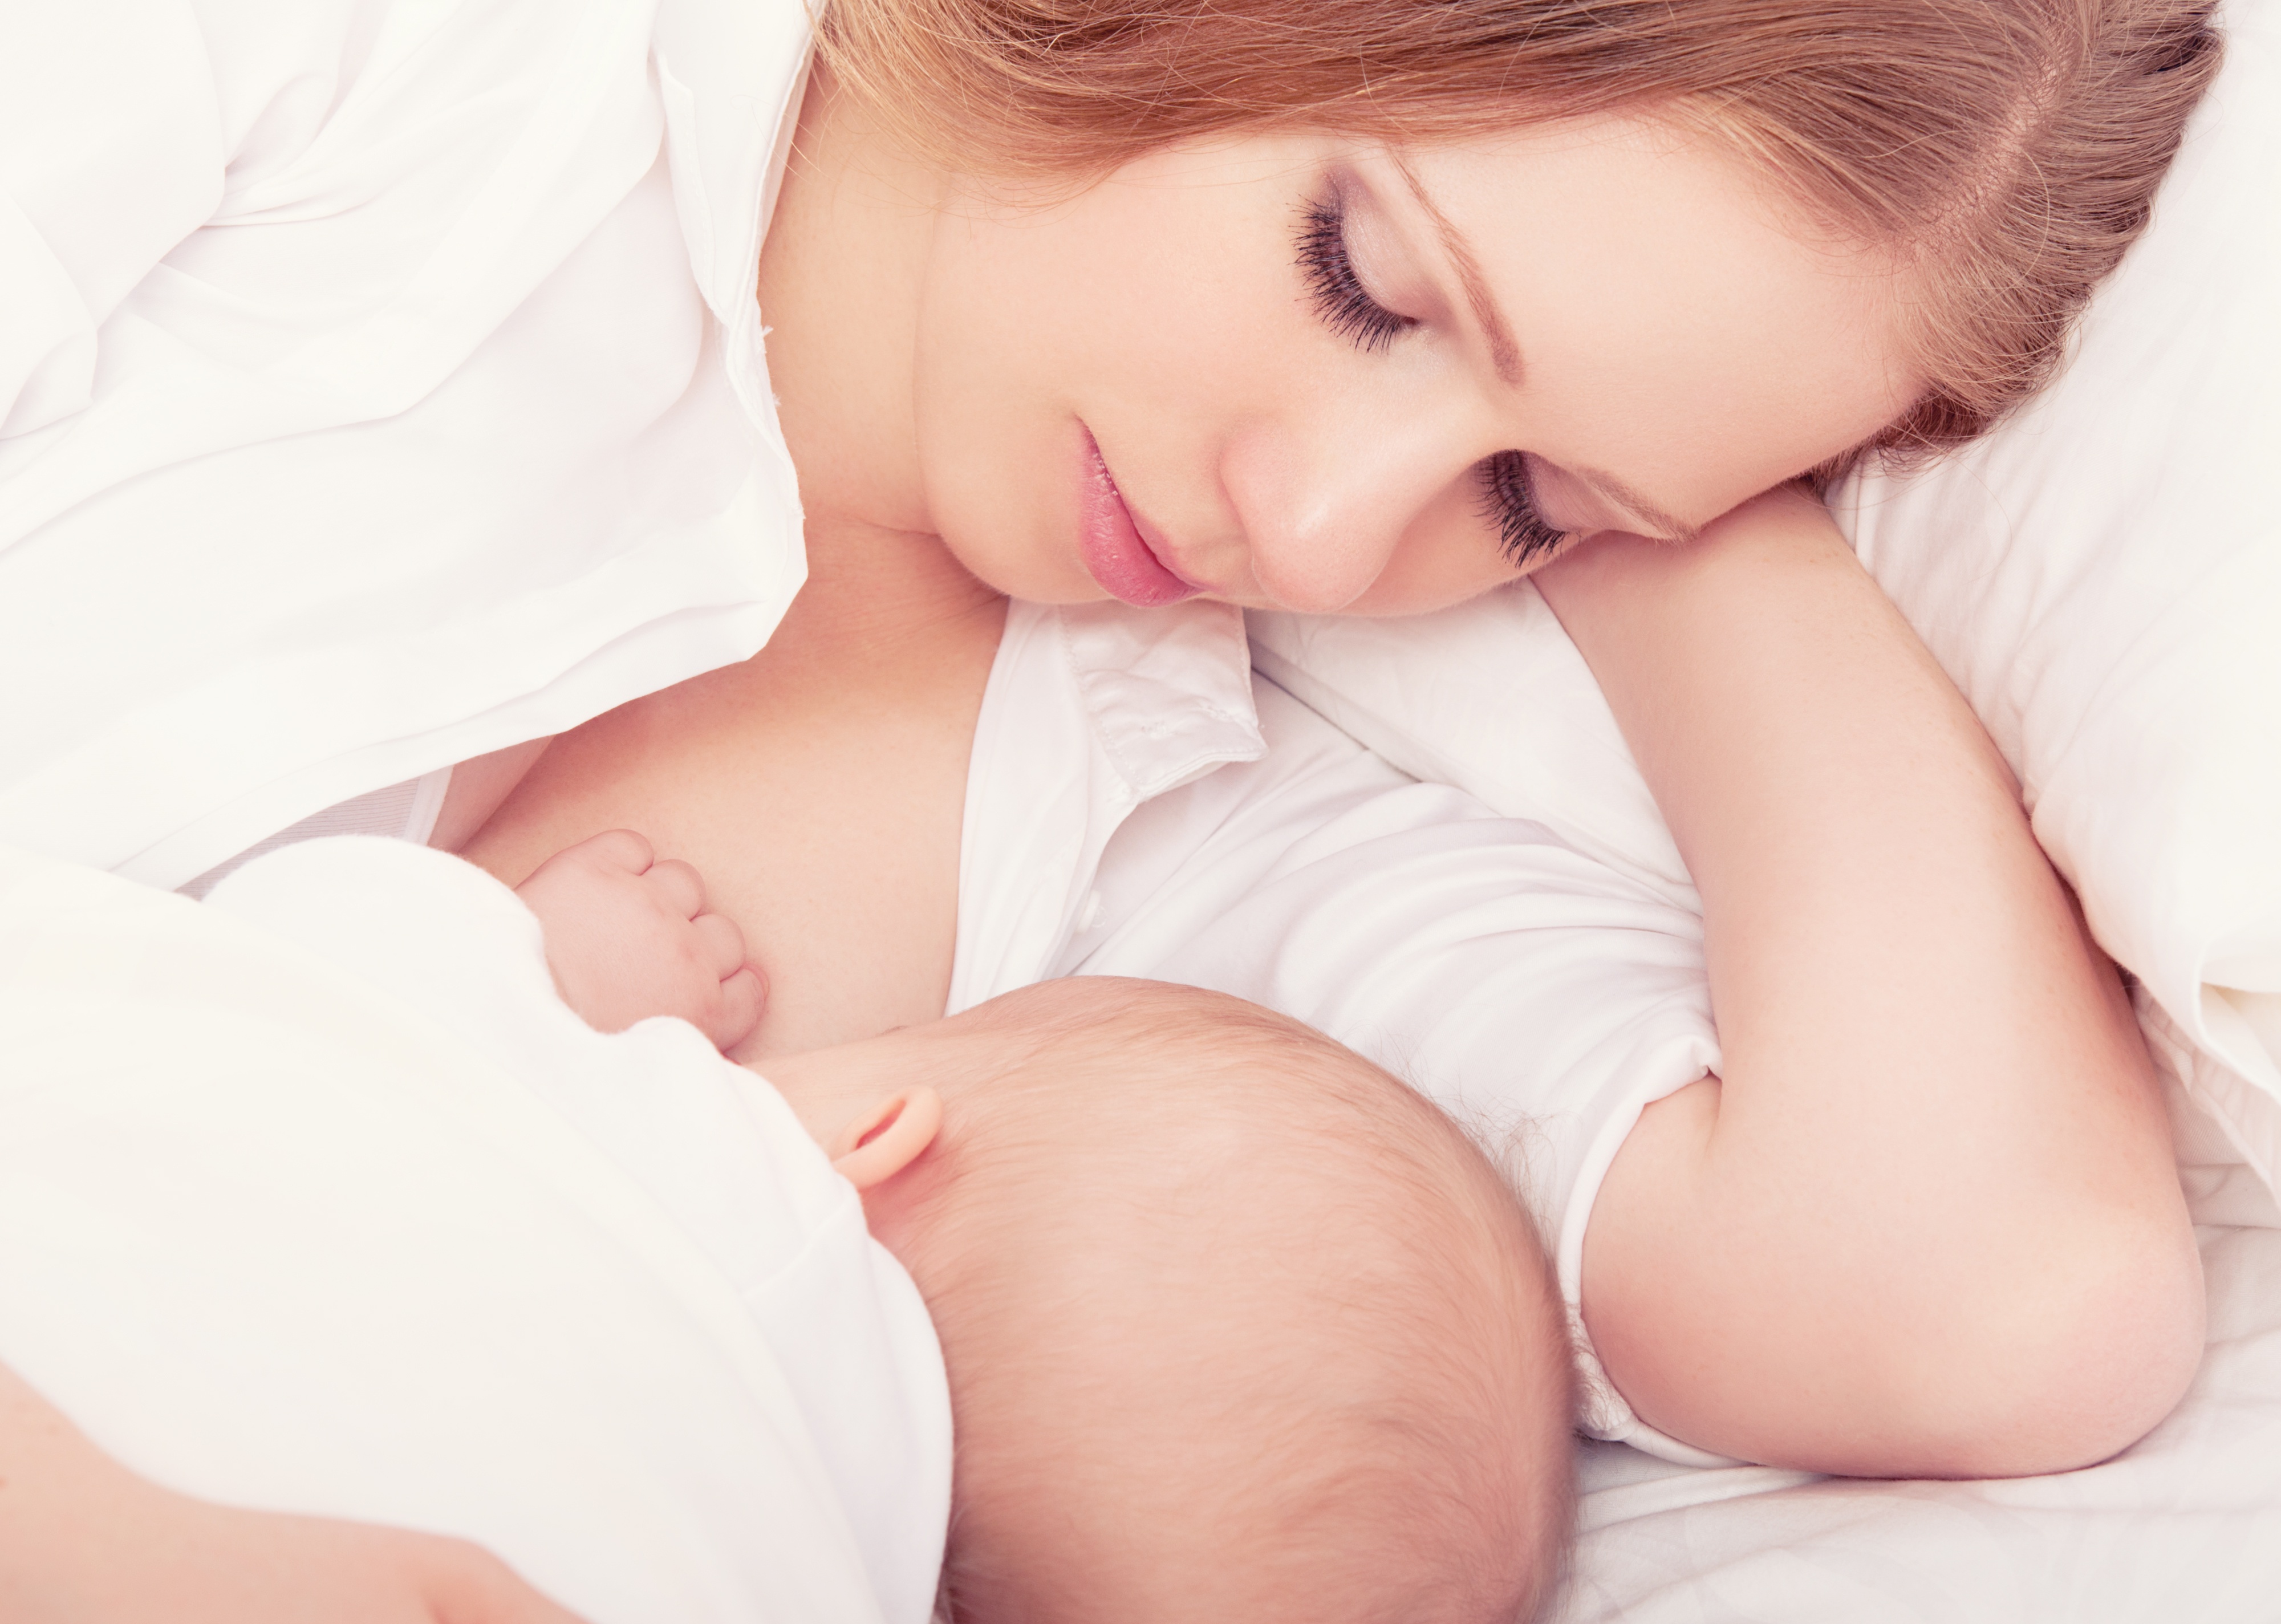 june07-mothers-perception-of-low-milk-supply-in-breastfeeding.jpg